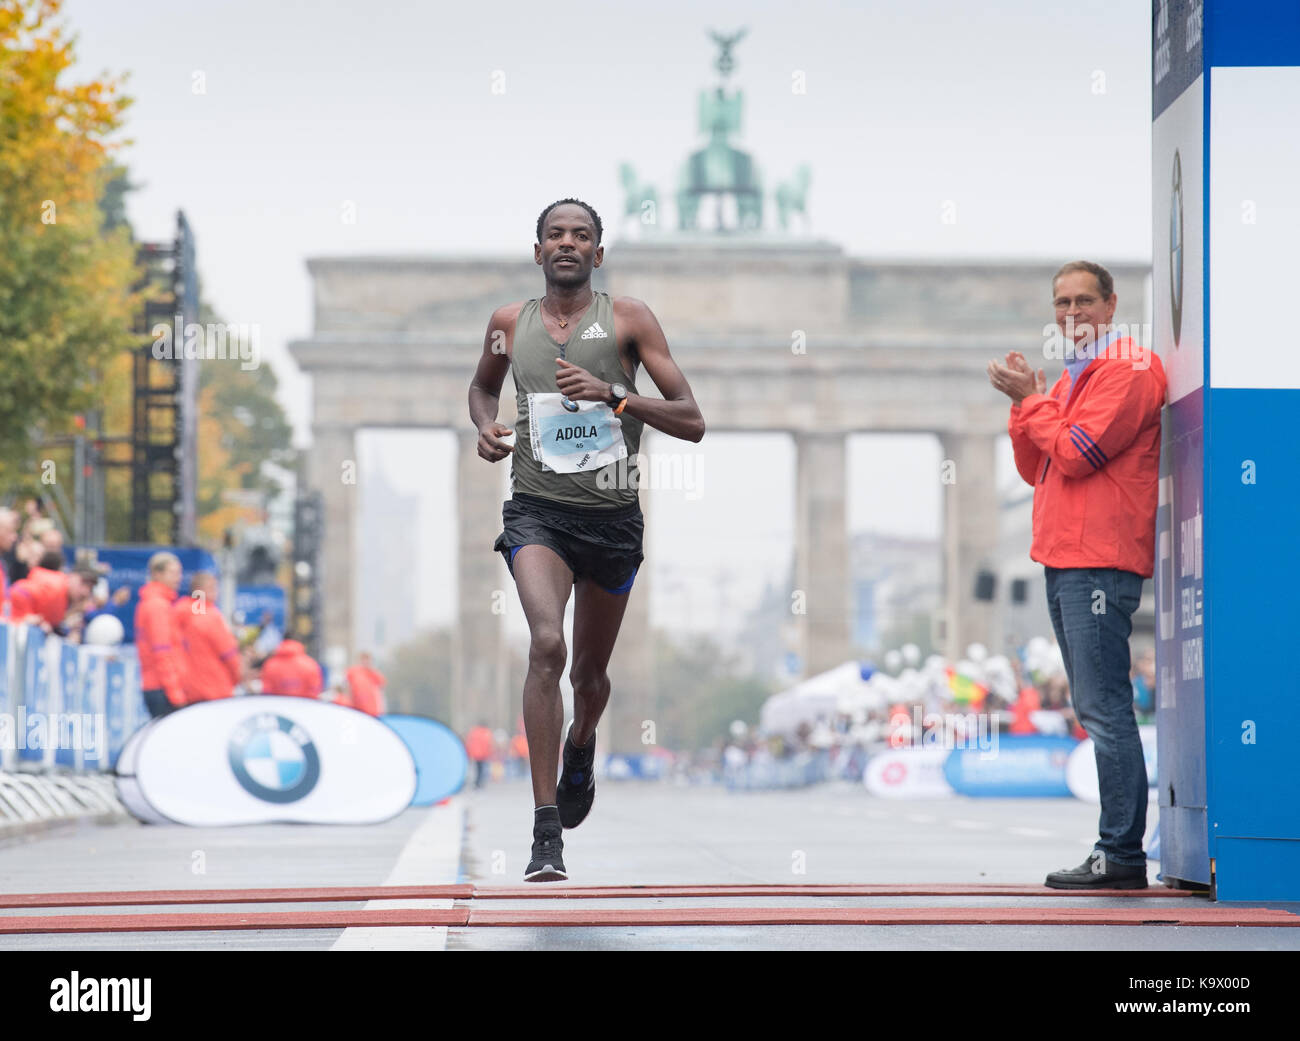 Berlin, Germany. 24th Sep, 2017. Ethiopian runner Guye Adola places 2nd  during the 44th Berlin Marathon in Berlin, Germany, 24 September 2017. On  the right is Berlin's mayor Michael Mueller. Credit: Soeren